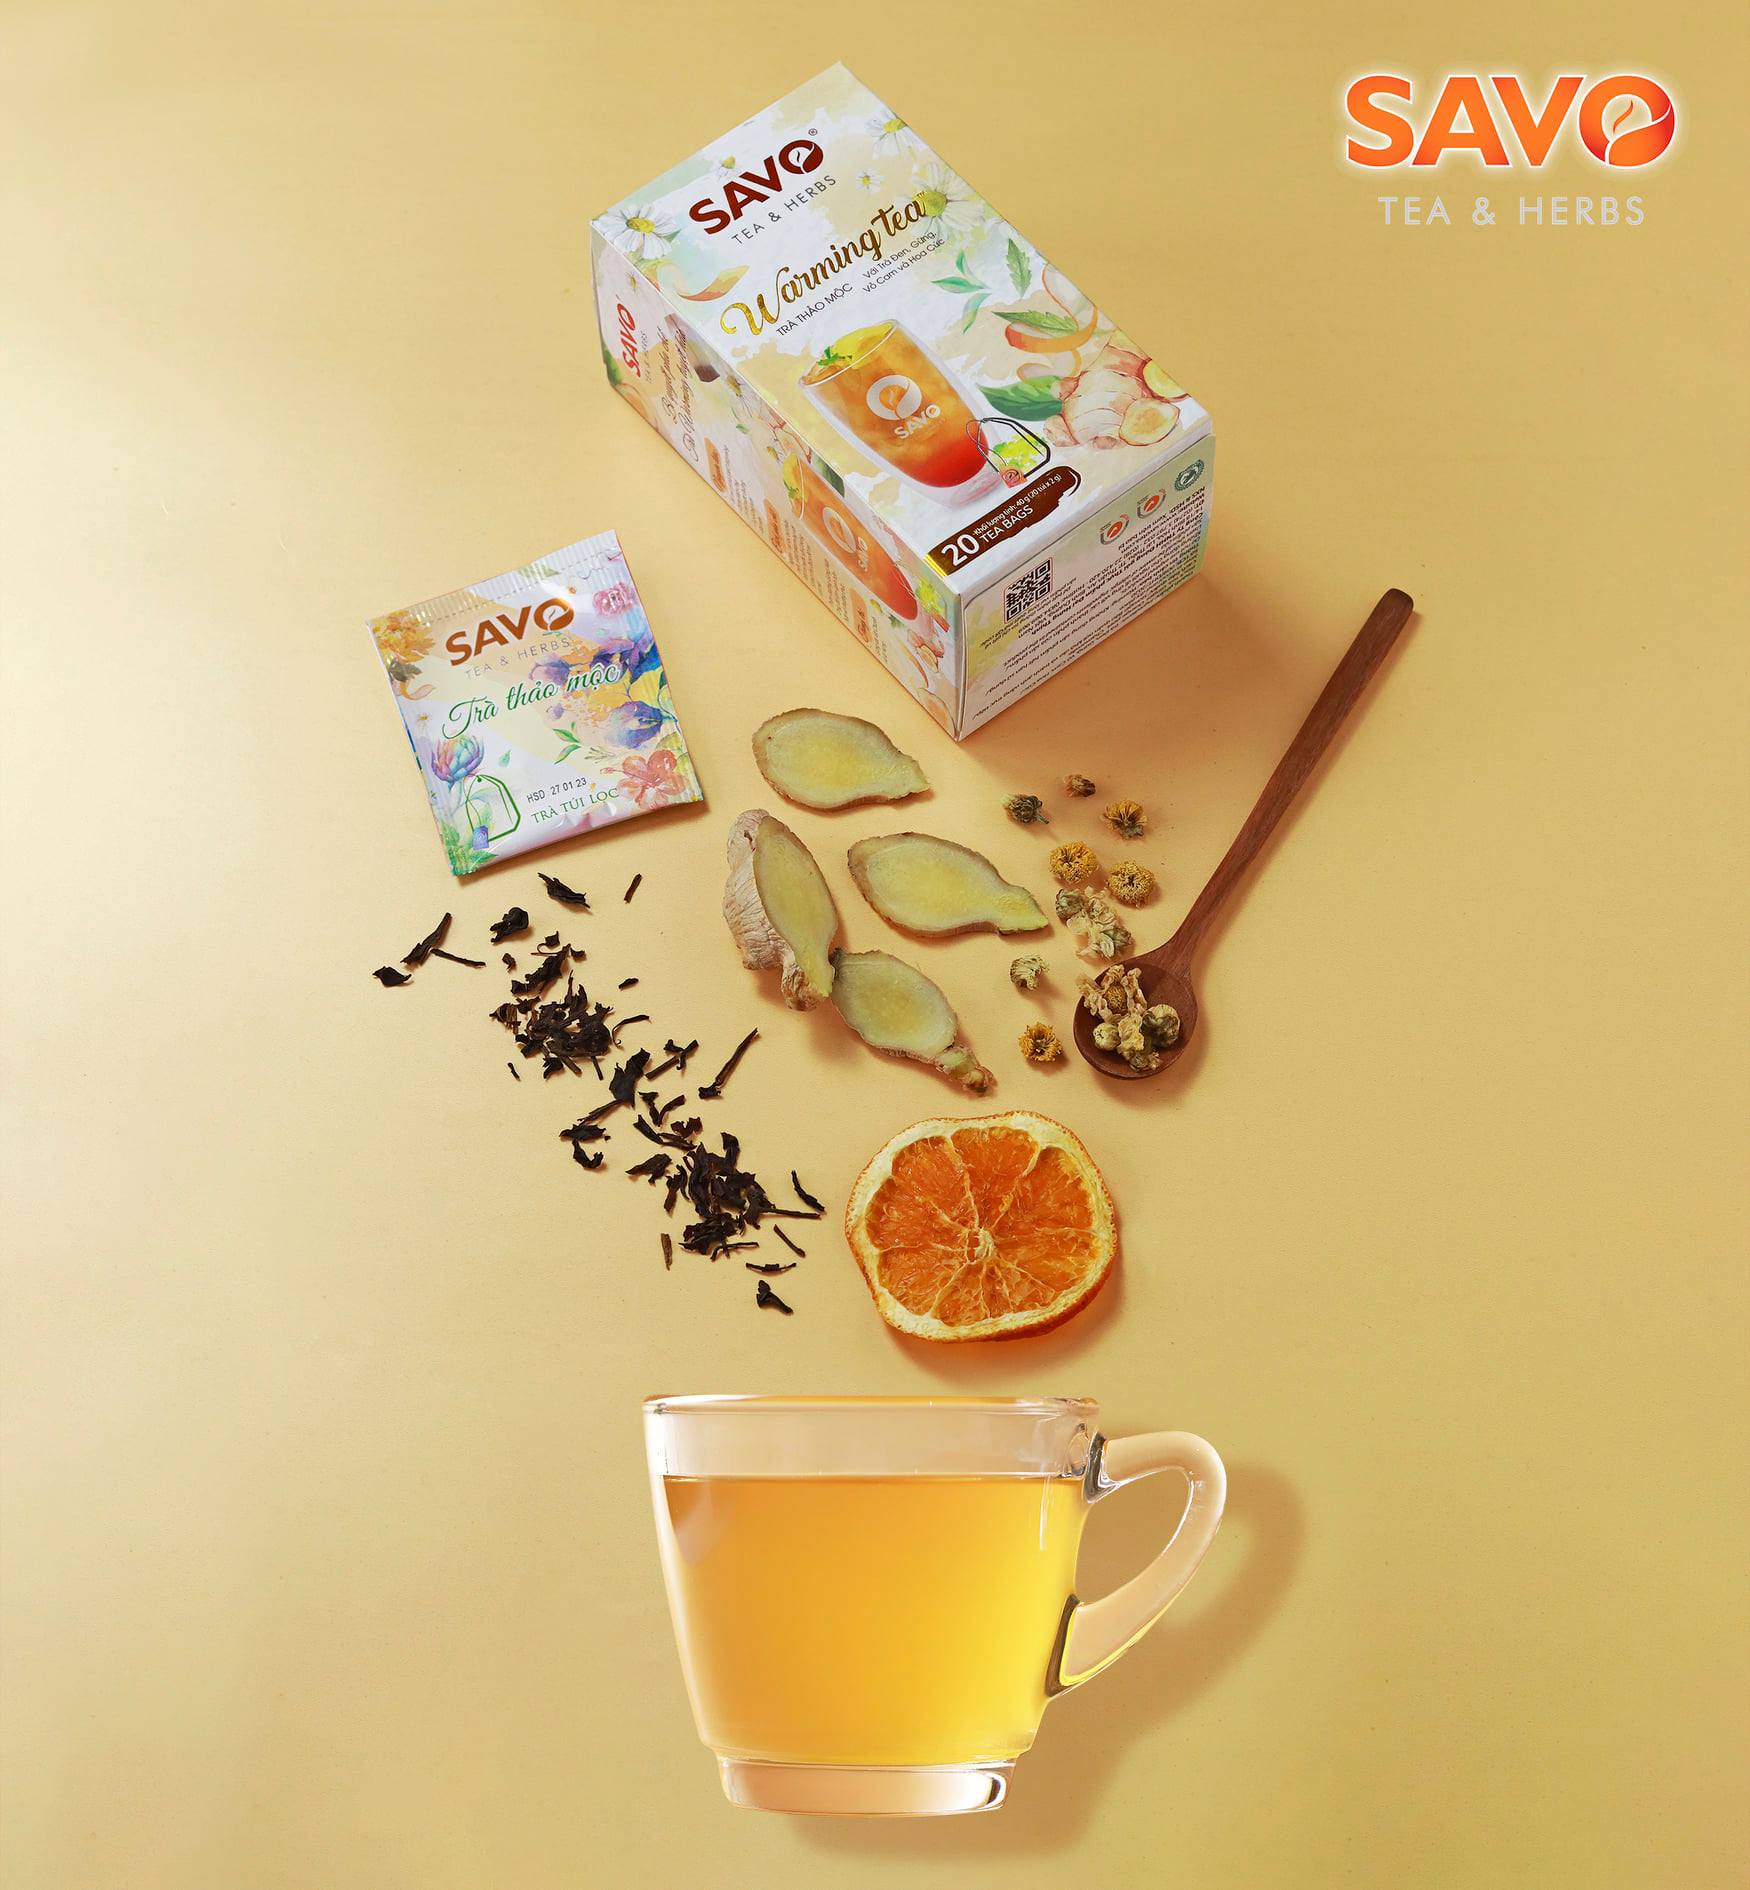 Trà Thảo Mộc SAVO WARMING (Warming Herbal Tea) 